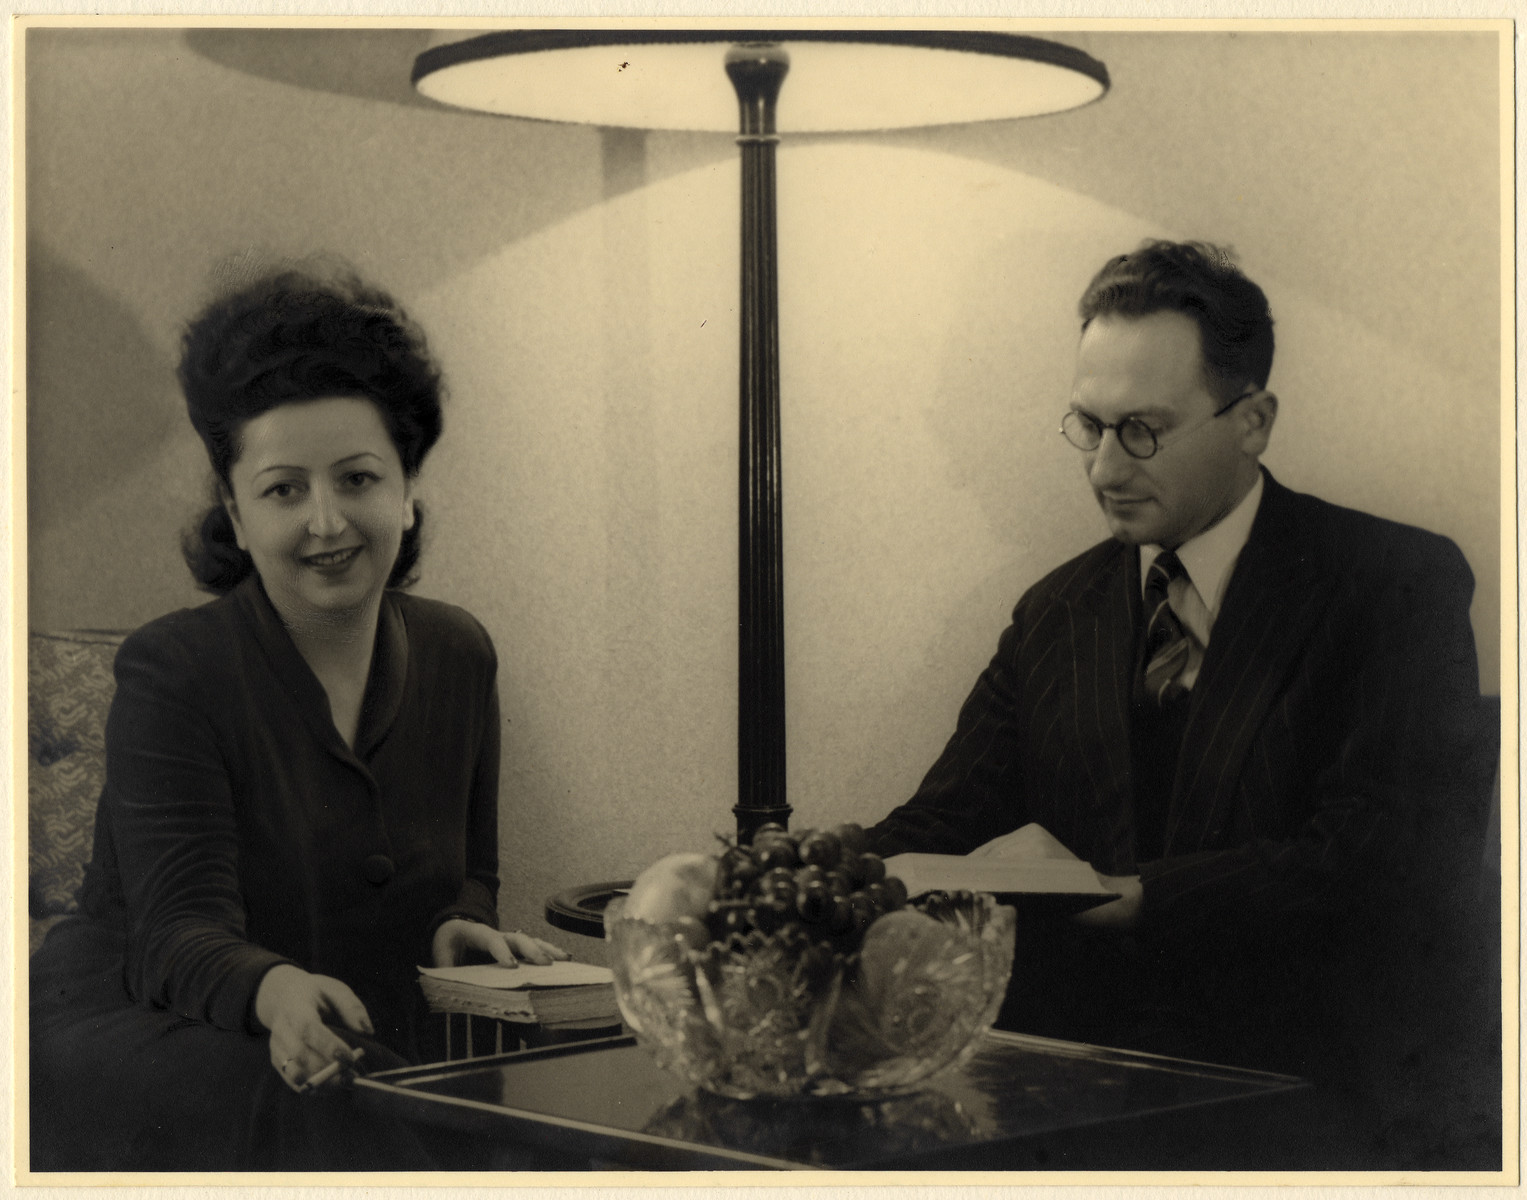 Postwar portrait of Jewish rescuers and intellectuals, Chaim and Fela Perelman.